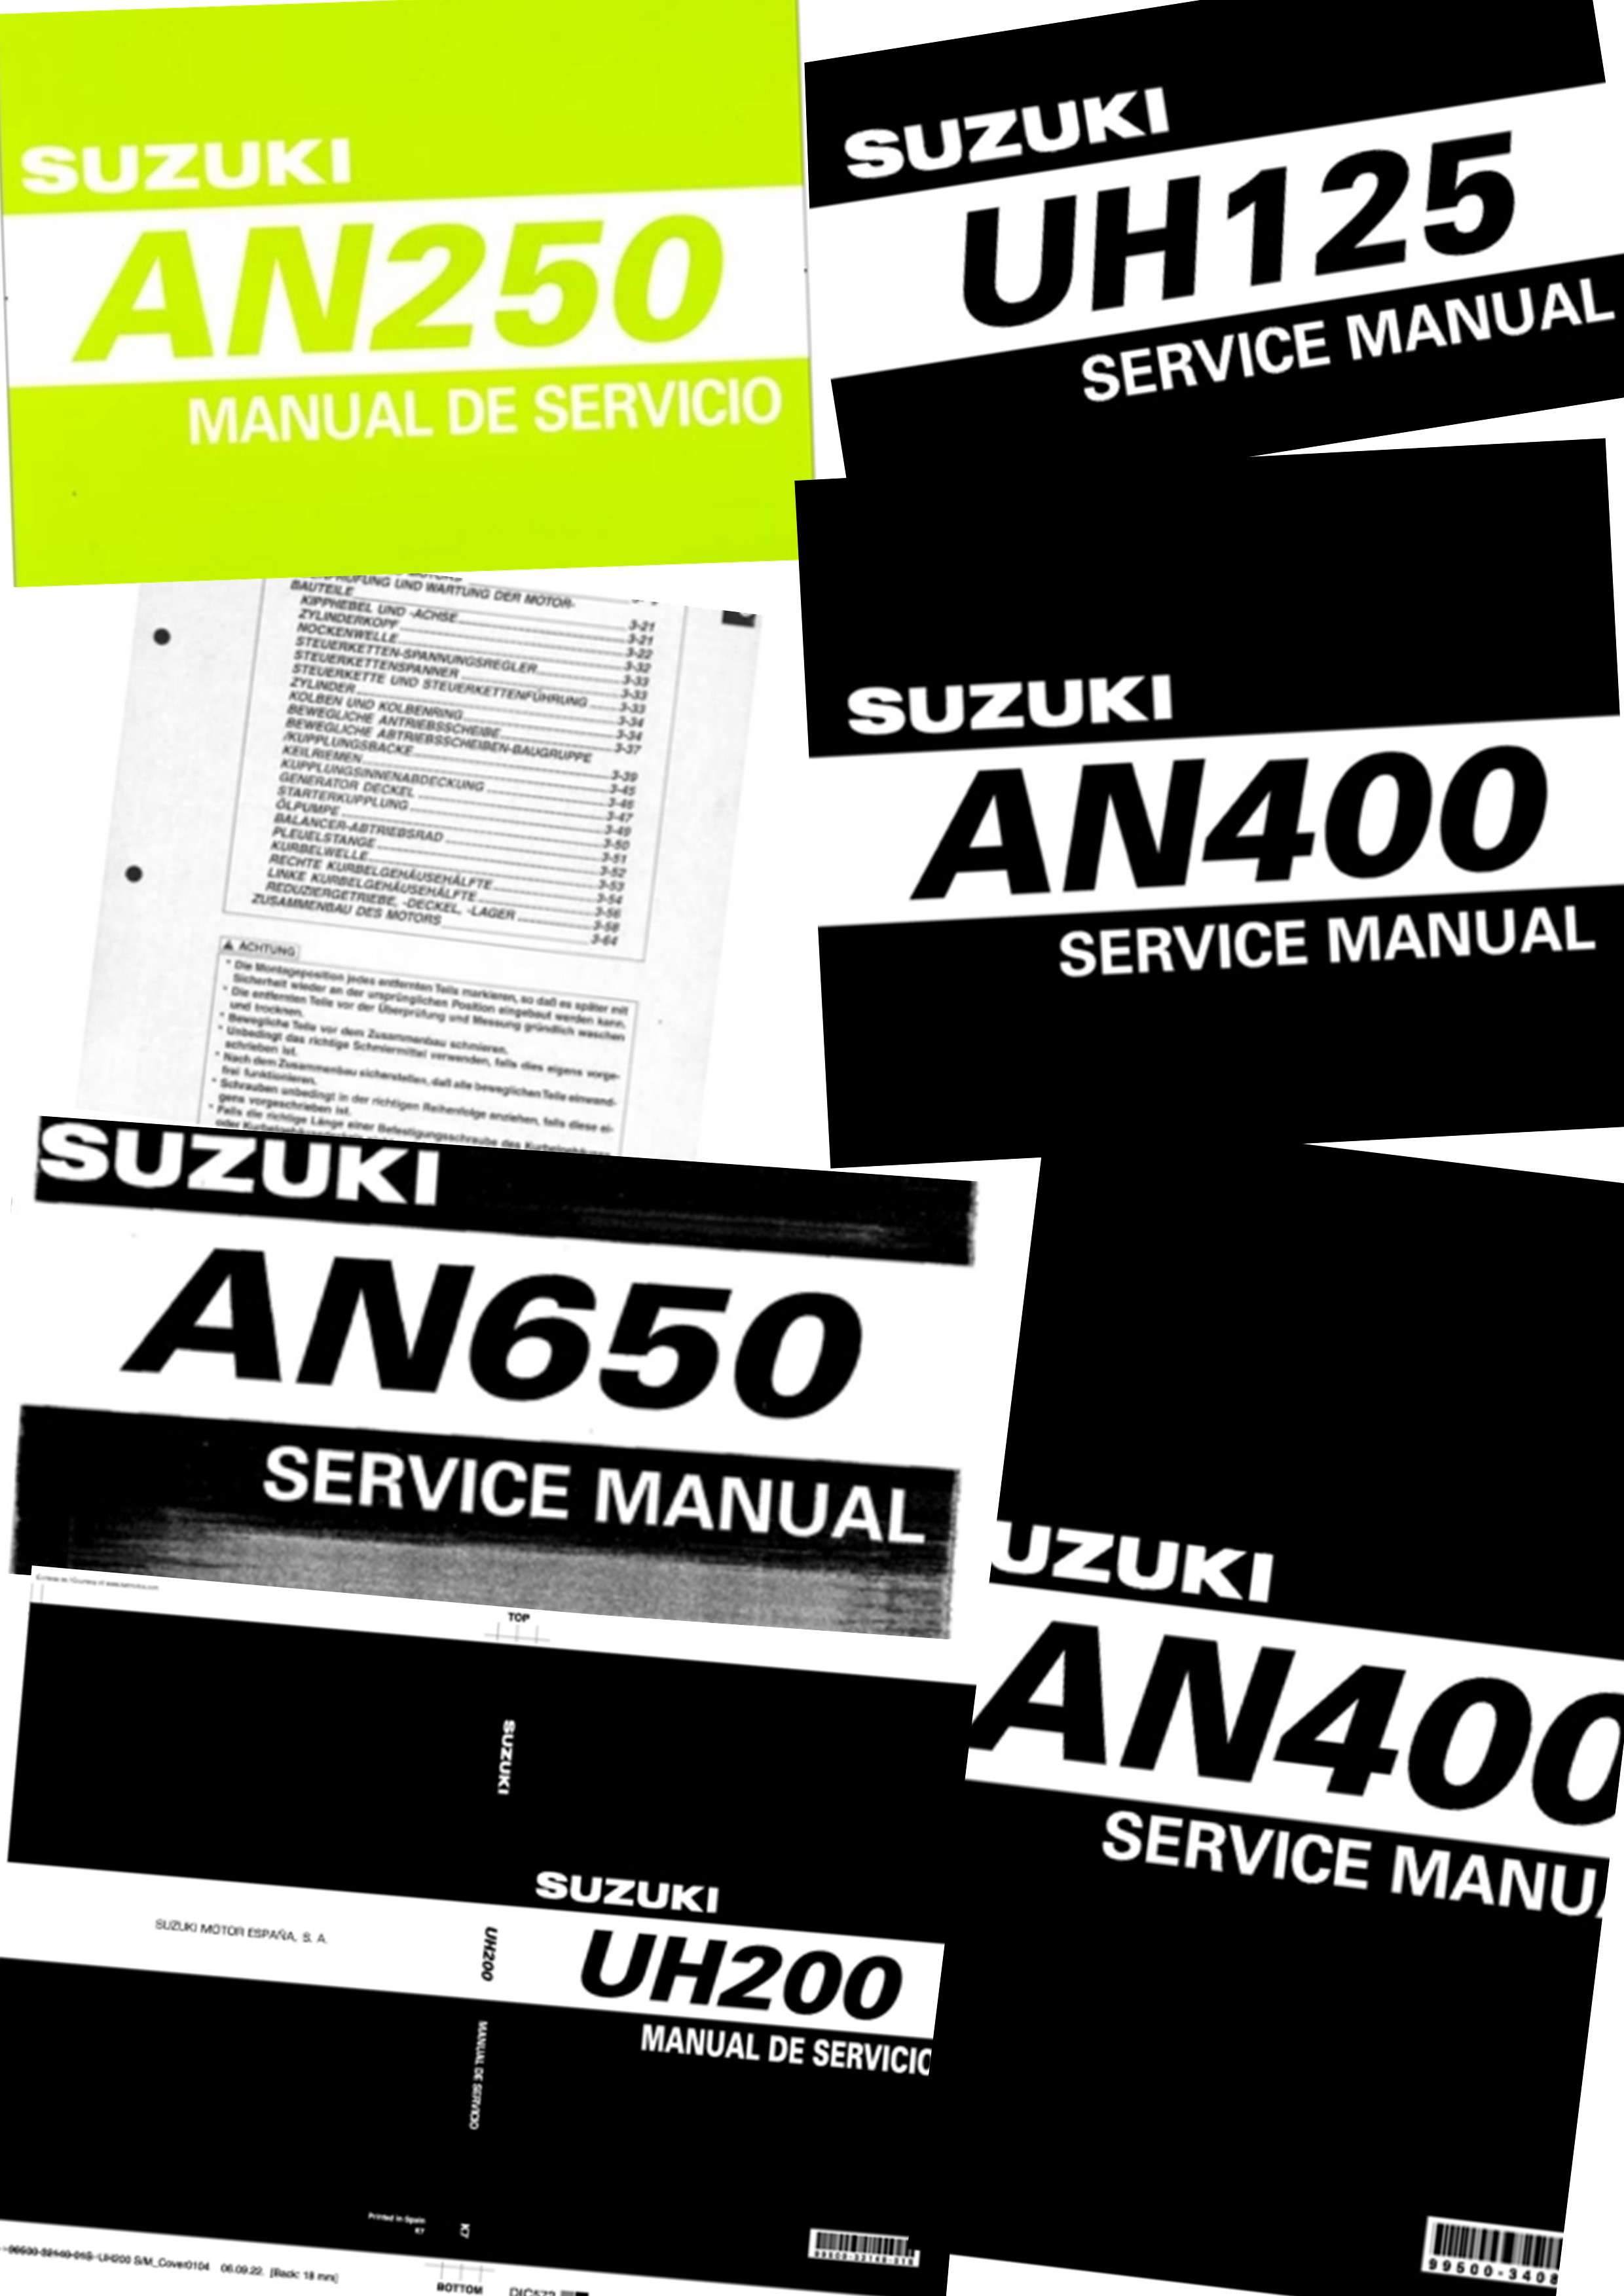 Suzuki Burgman Service Manuals